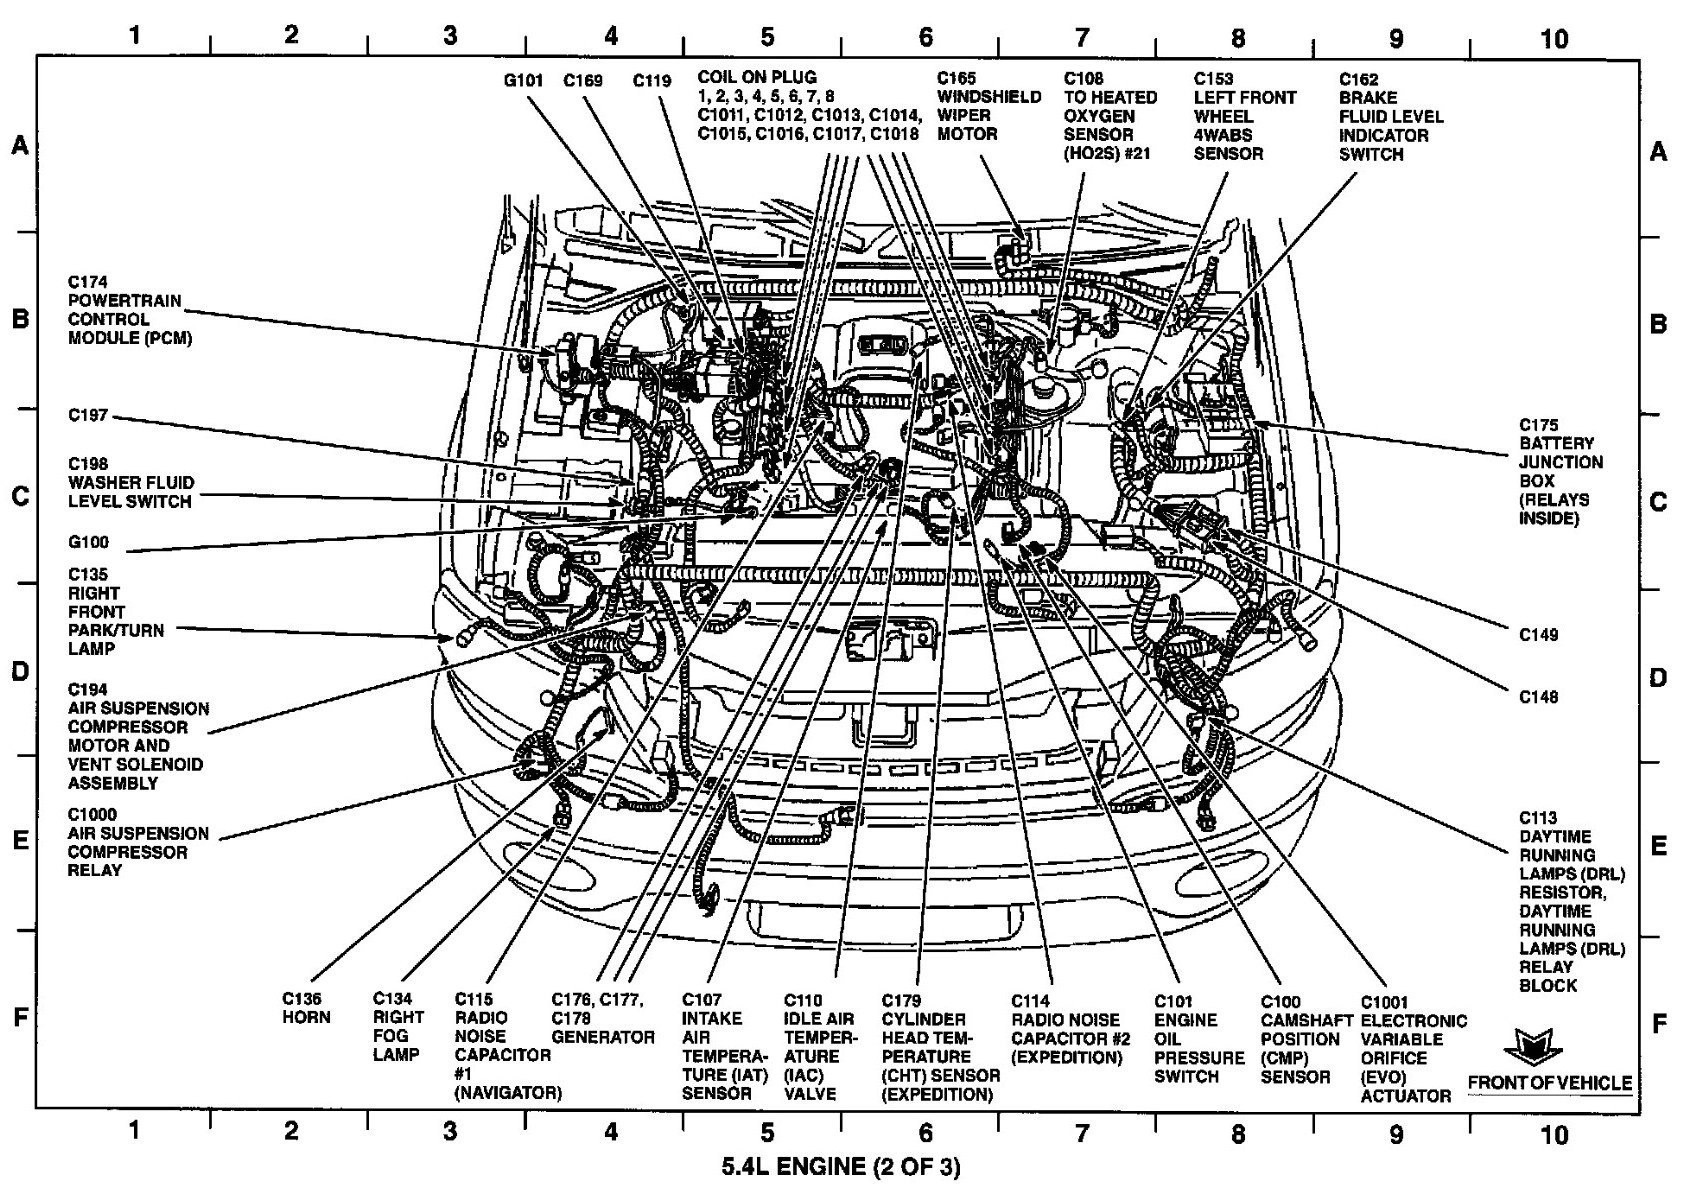 2008 Bmw 328i Engine Parts Diagram 1998 Bmw 528i Engine Diagram Wiring Diagram Provider Of 2008 Bmw 328i Engine Parts Diagram